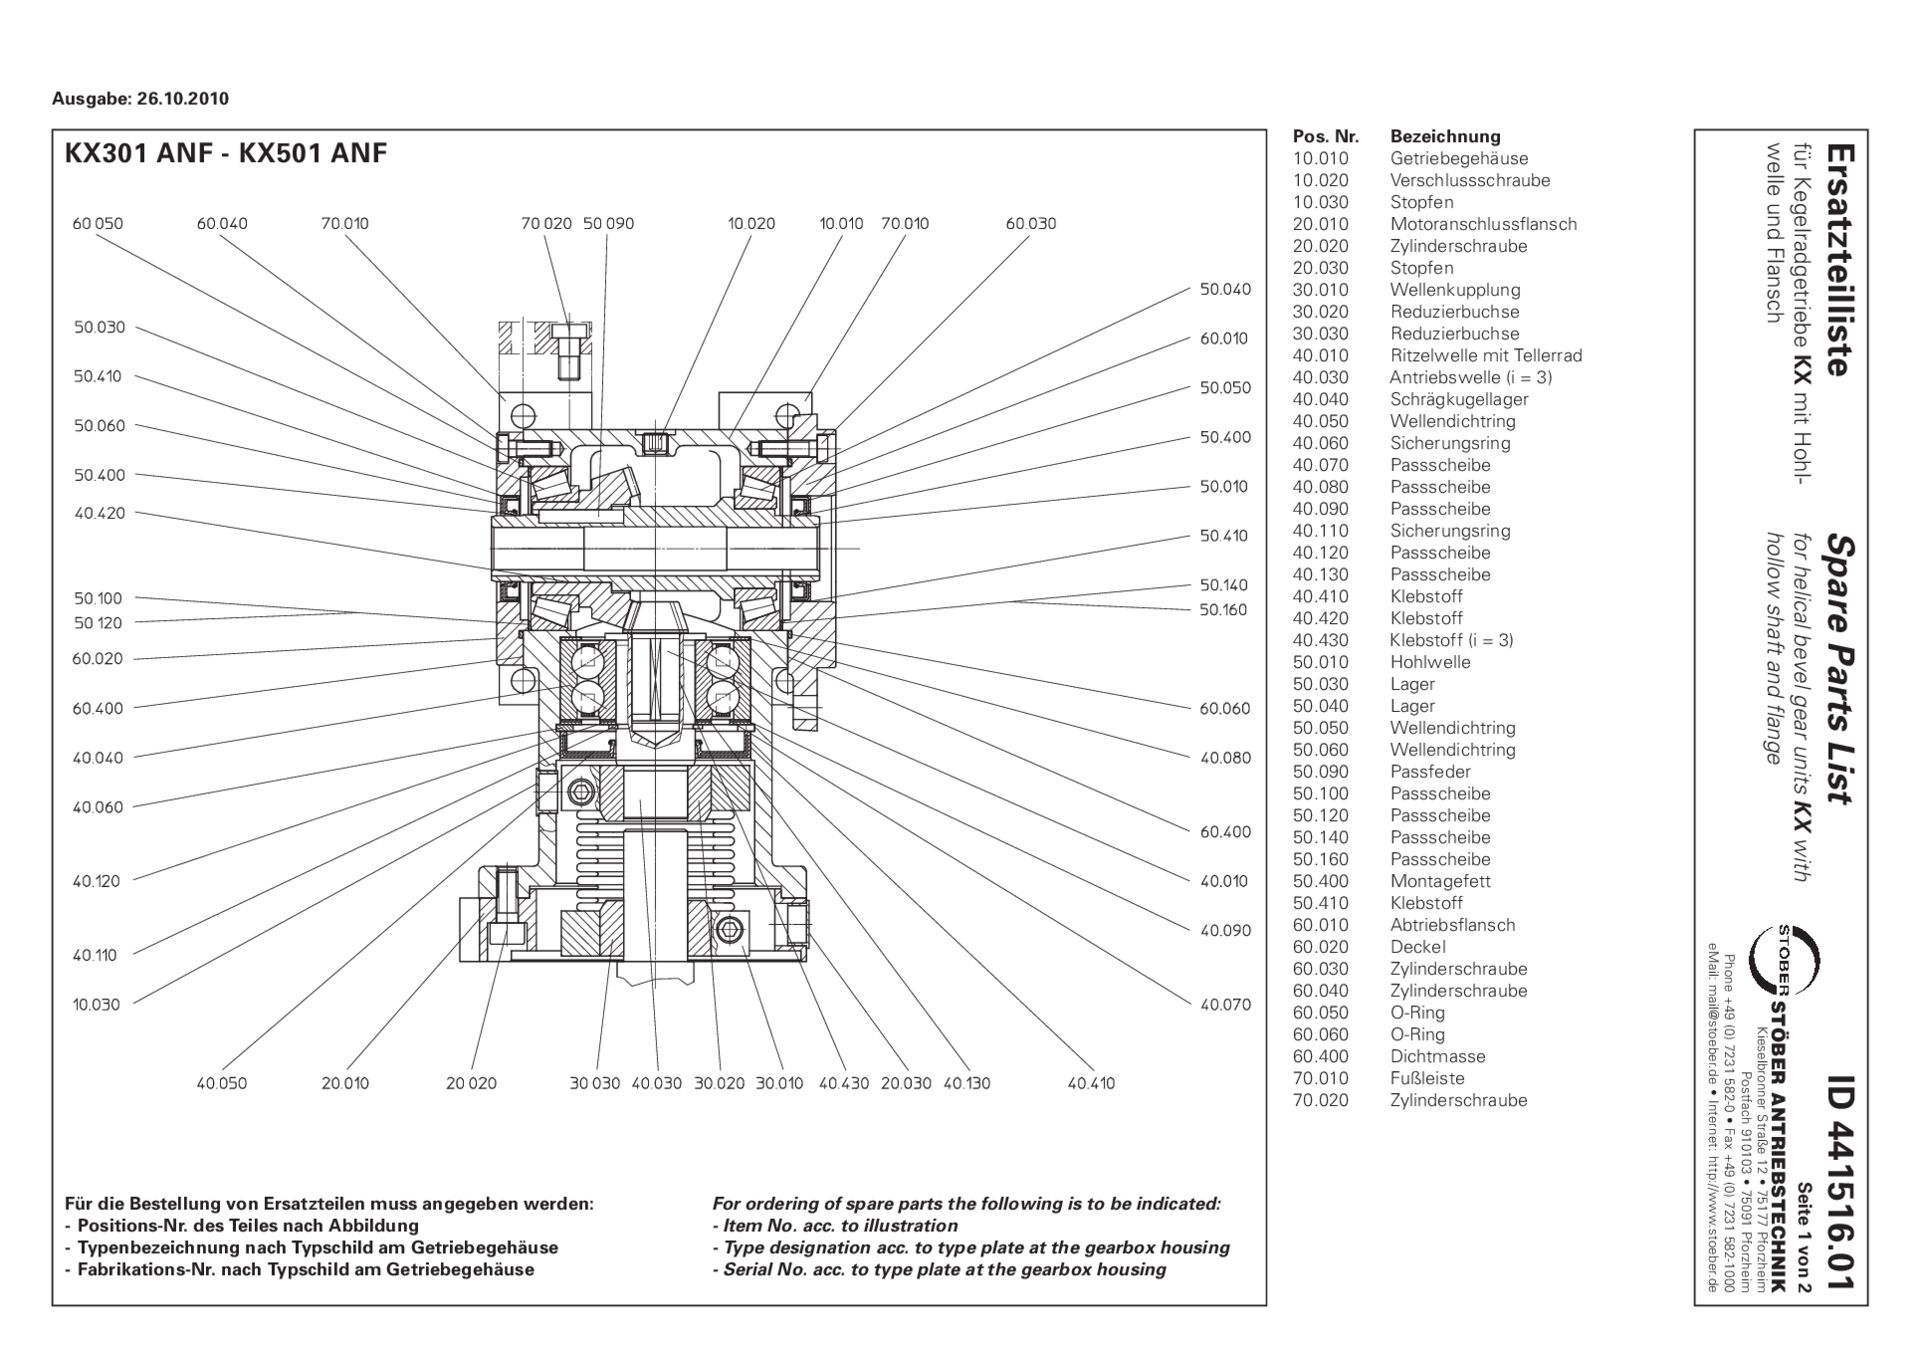 Replacement parts list helical bevel gear units KX301 KX401 KX501 ANF